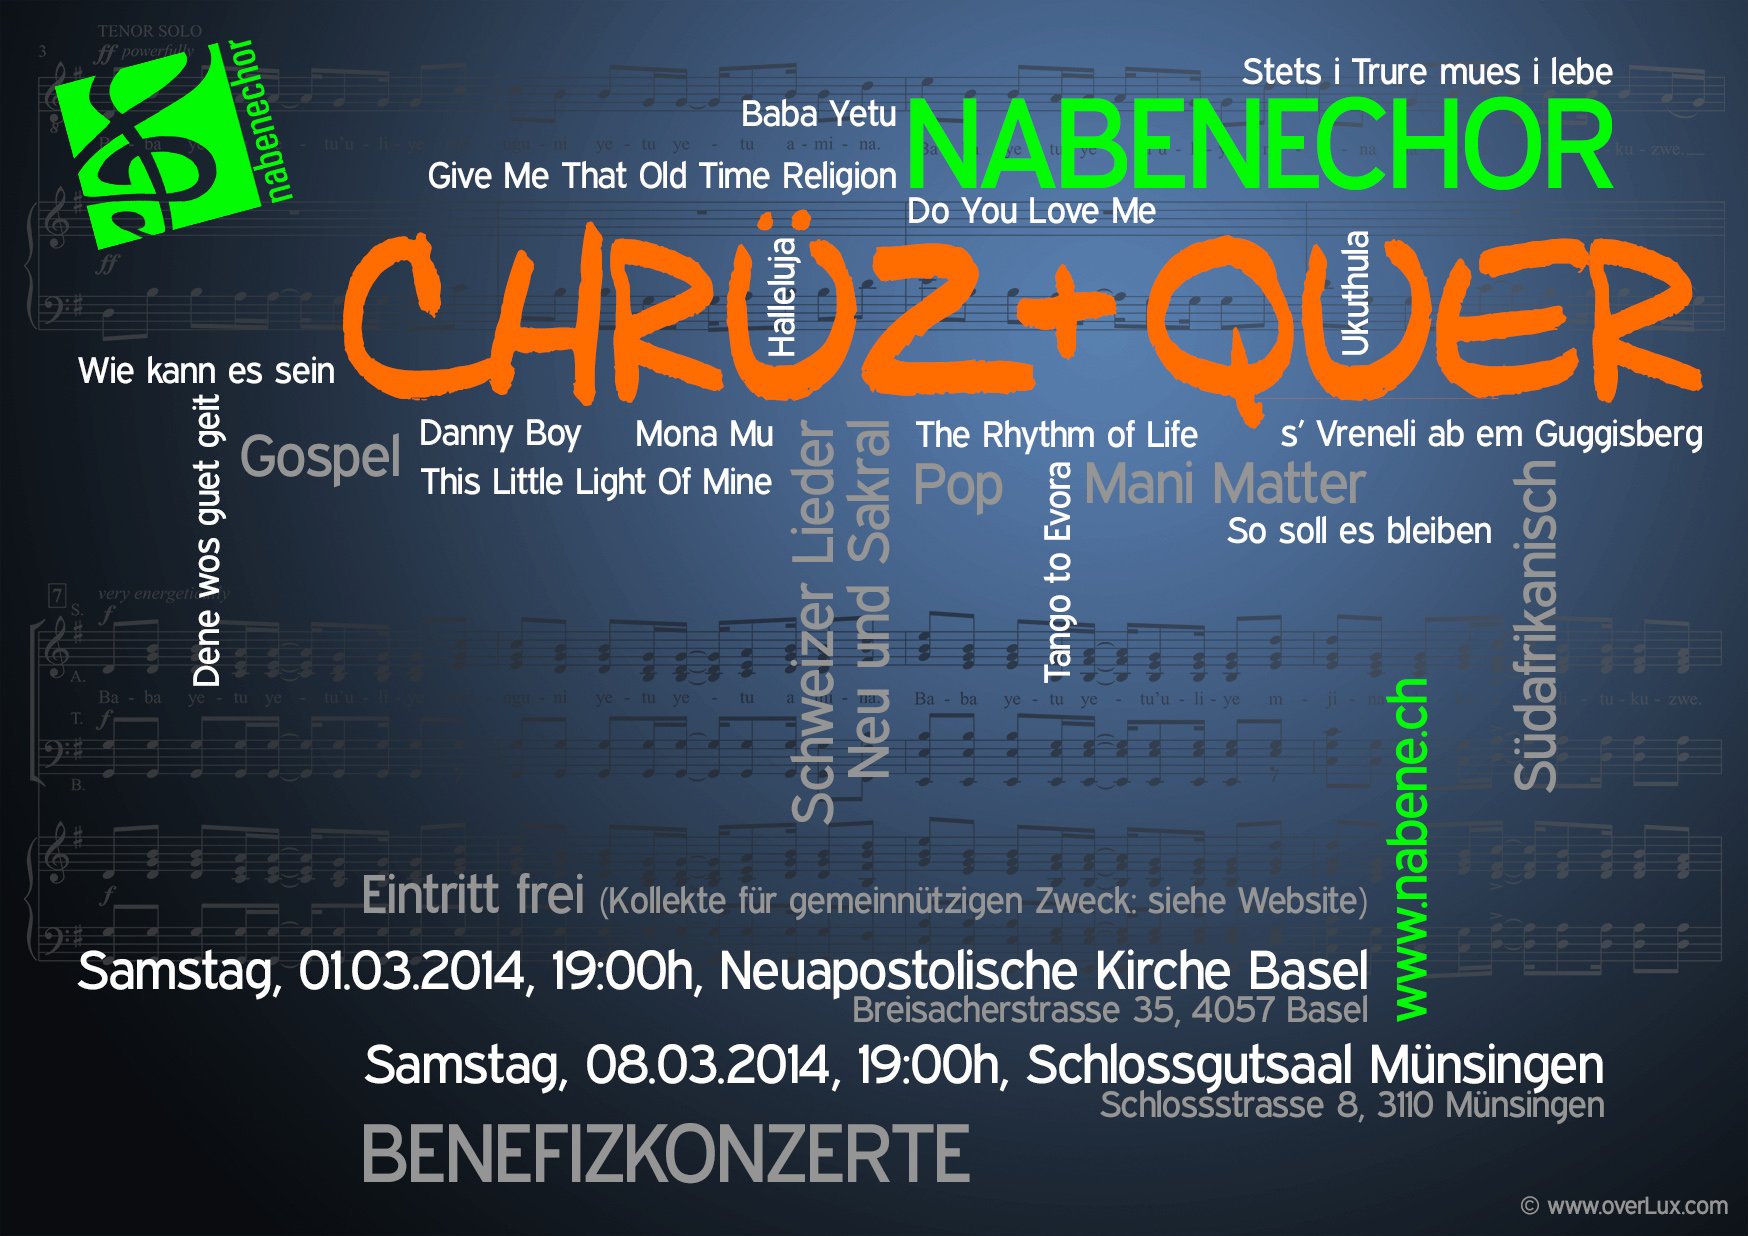 nabene2014_chruez-quer_konzert12_flyer_large